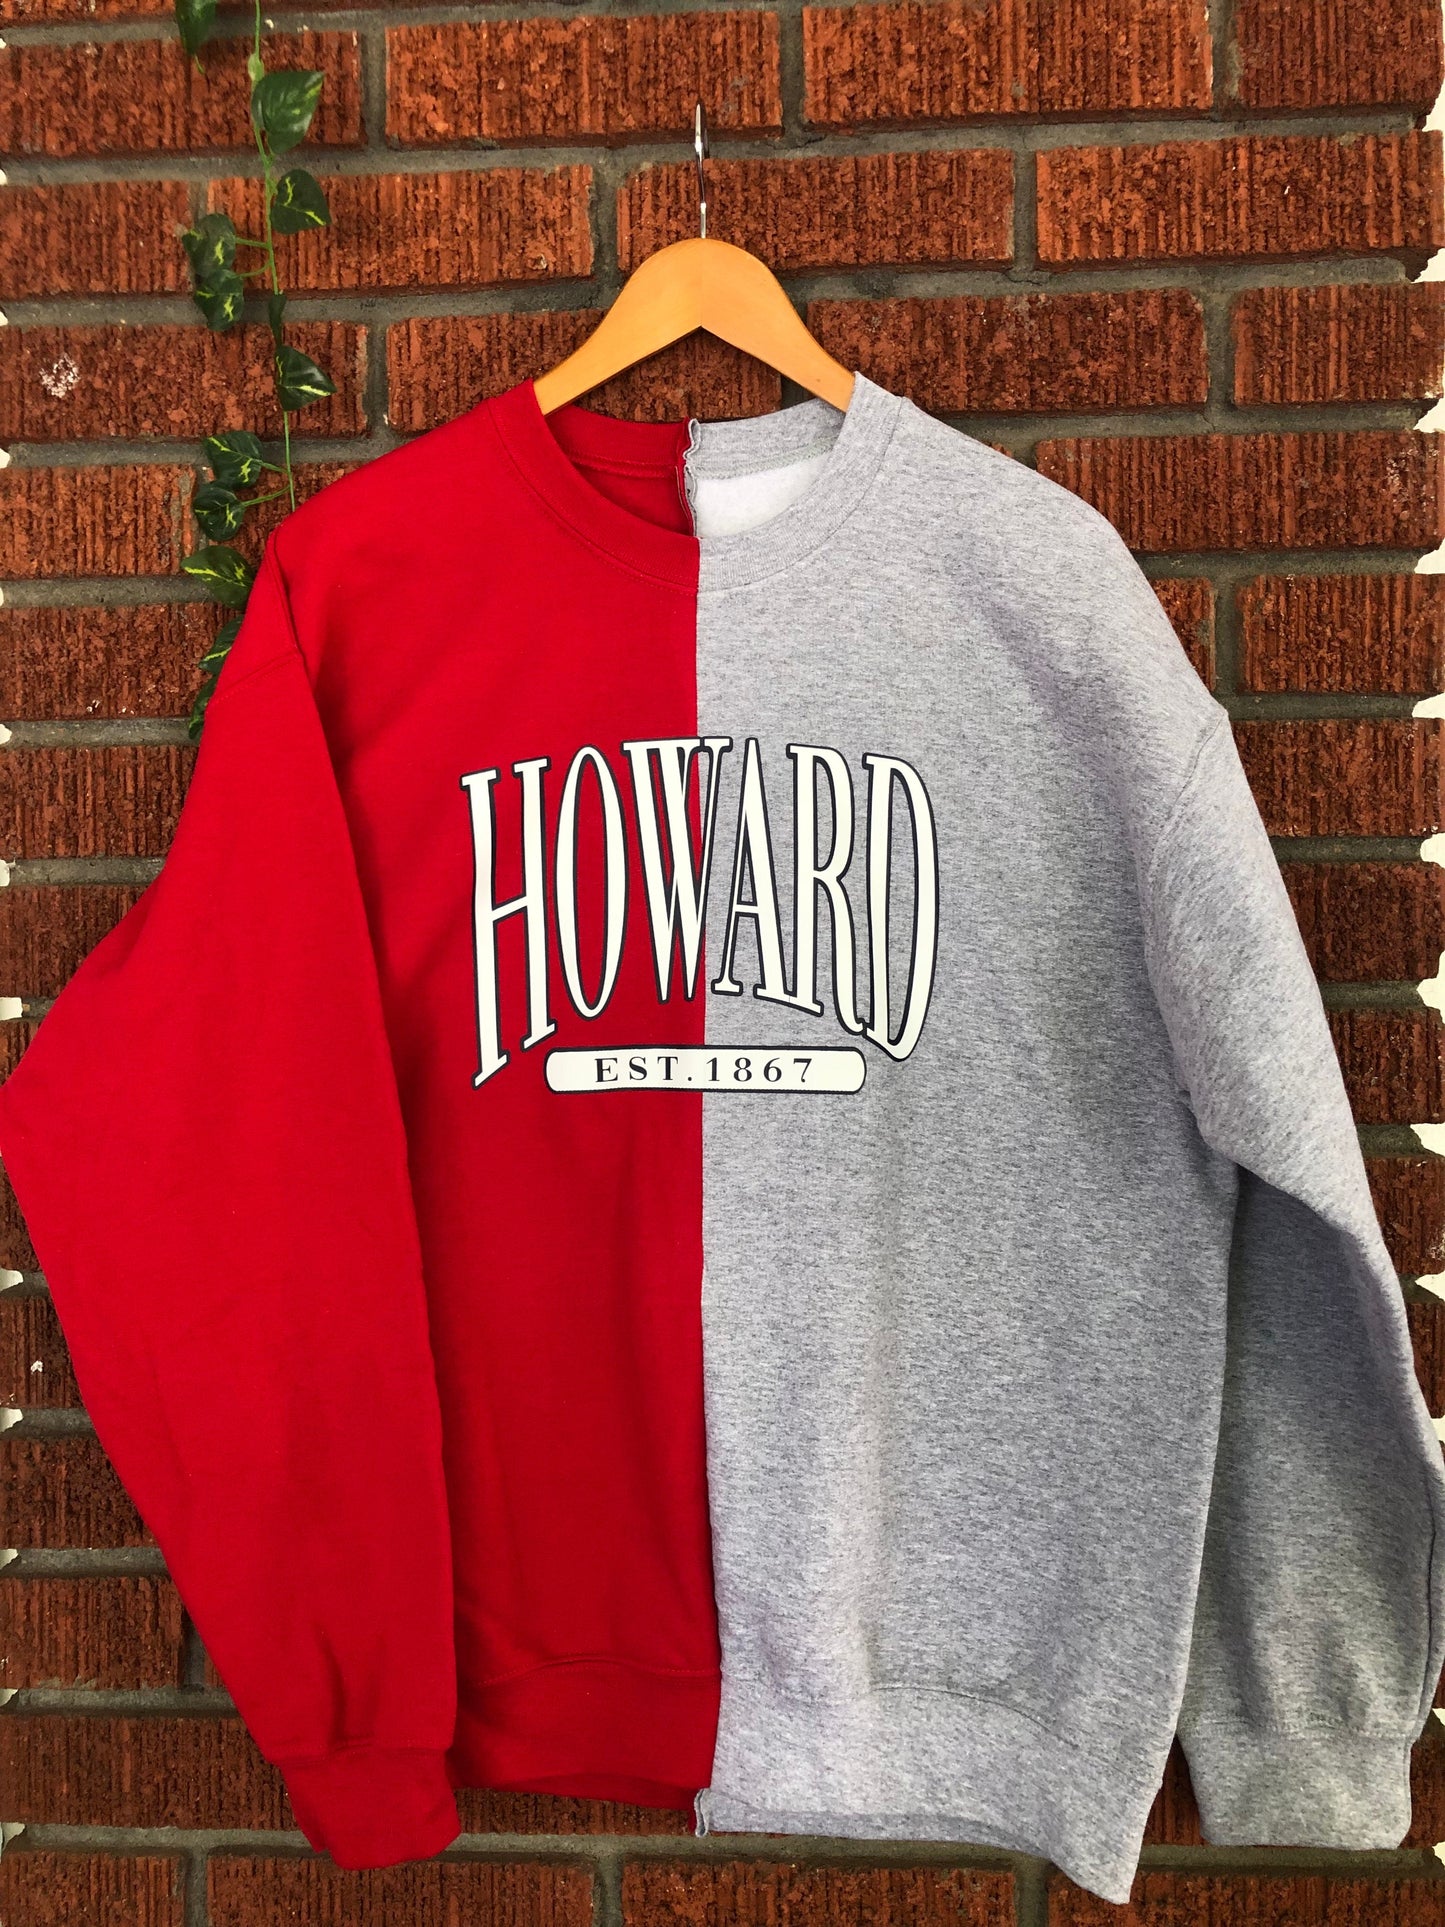 Howard University HU half and half sweater sweatshirt est 1867